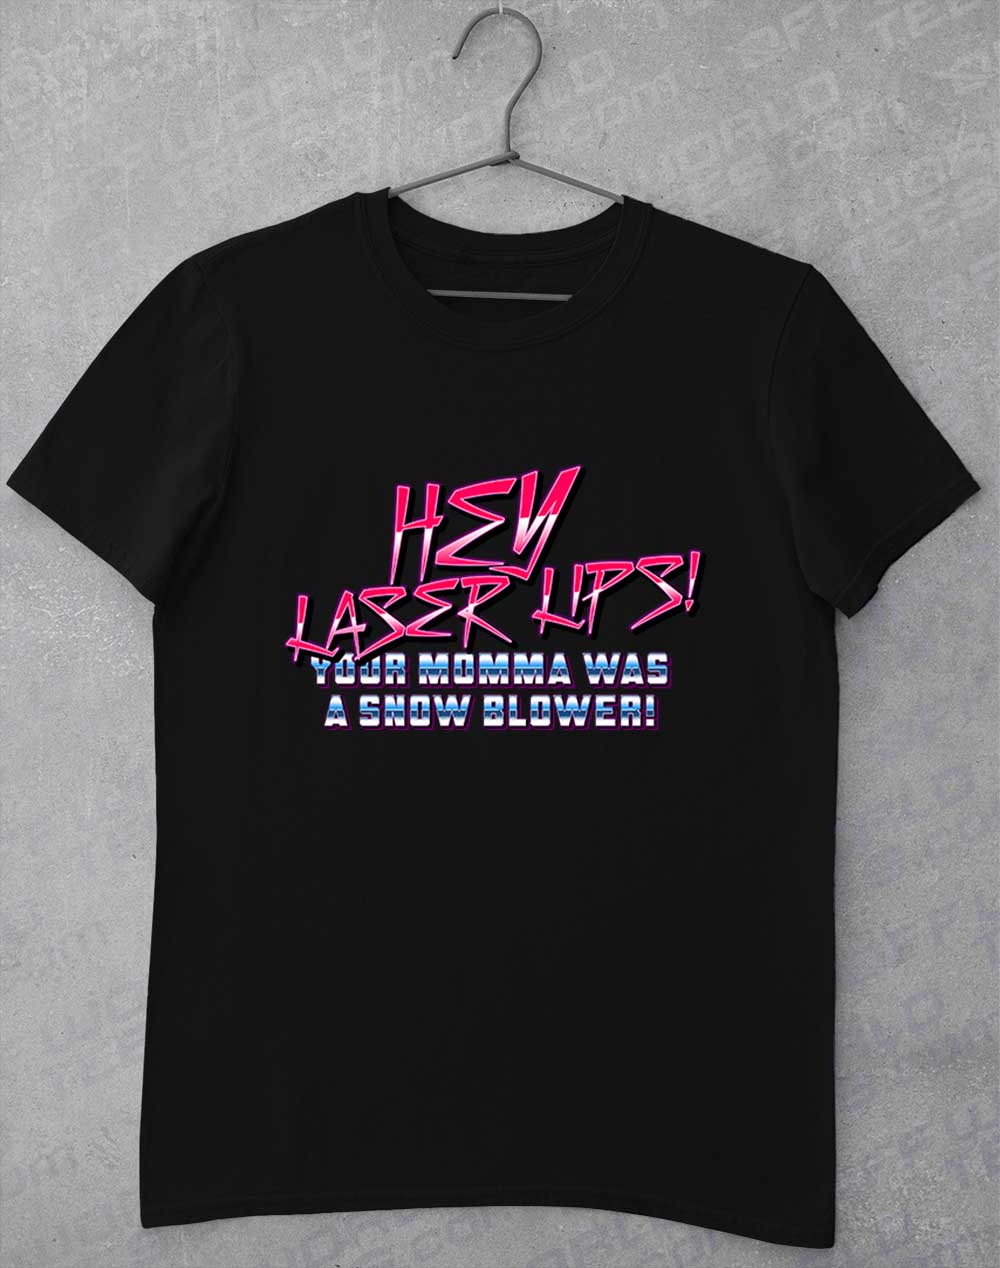 Black - Hey Laser Lips T-Shirt